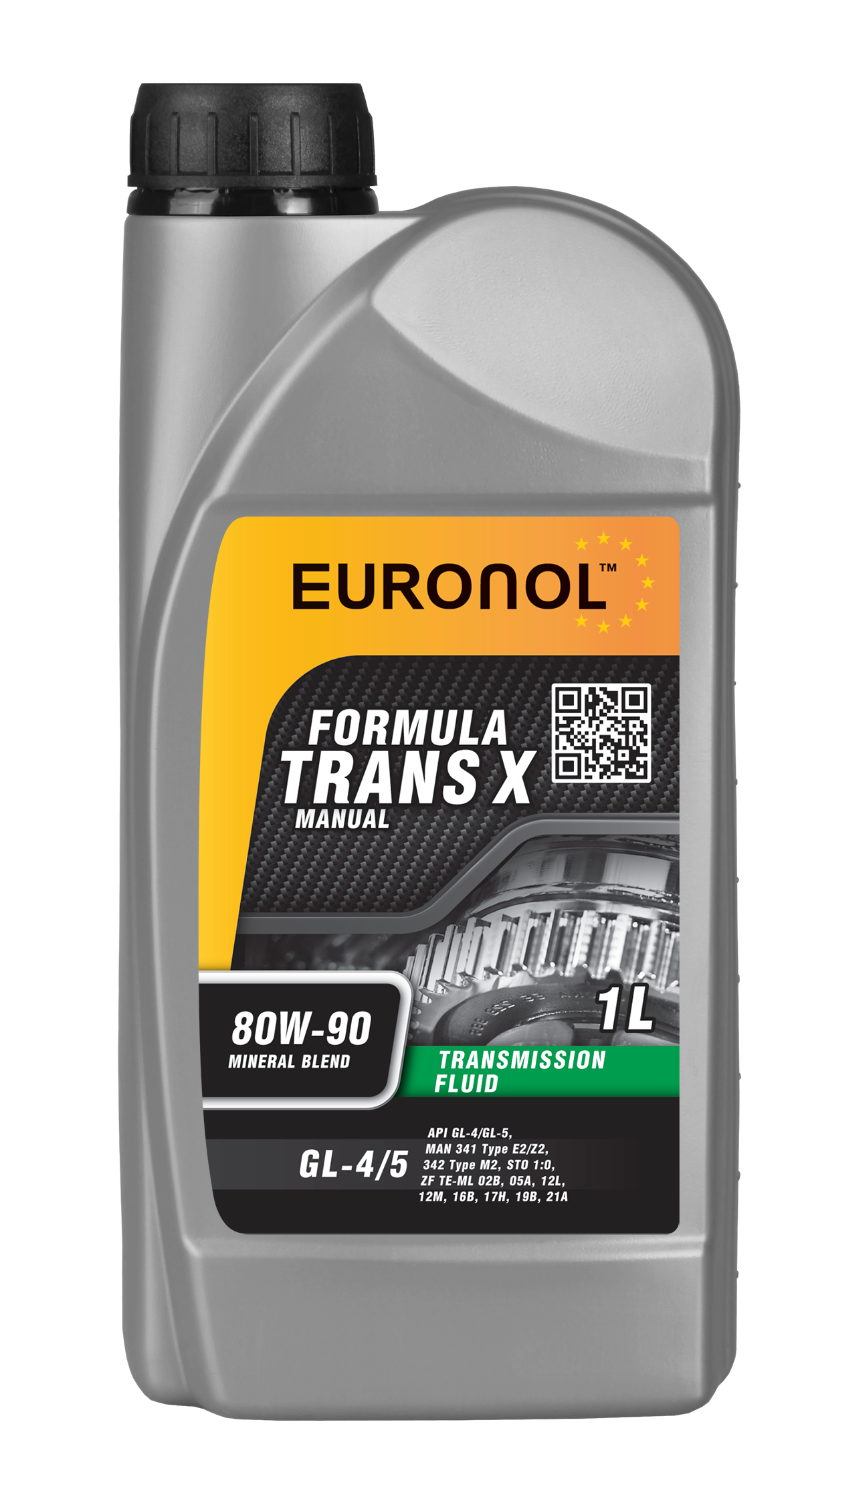 фото Трансмиссионное масло euronol trans x 80w-90 gl-4/5 1l